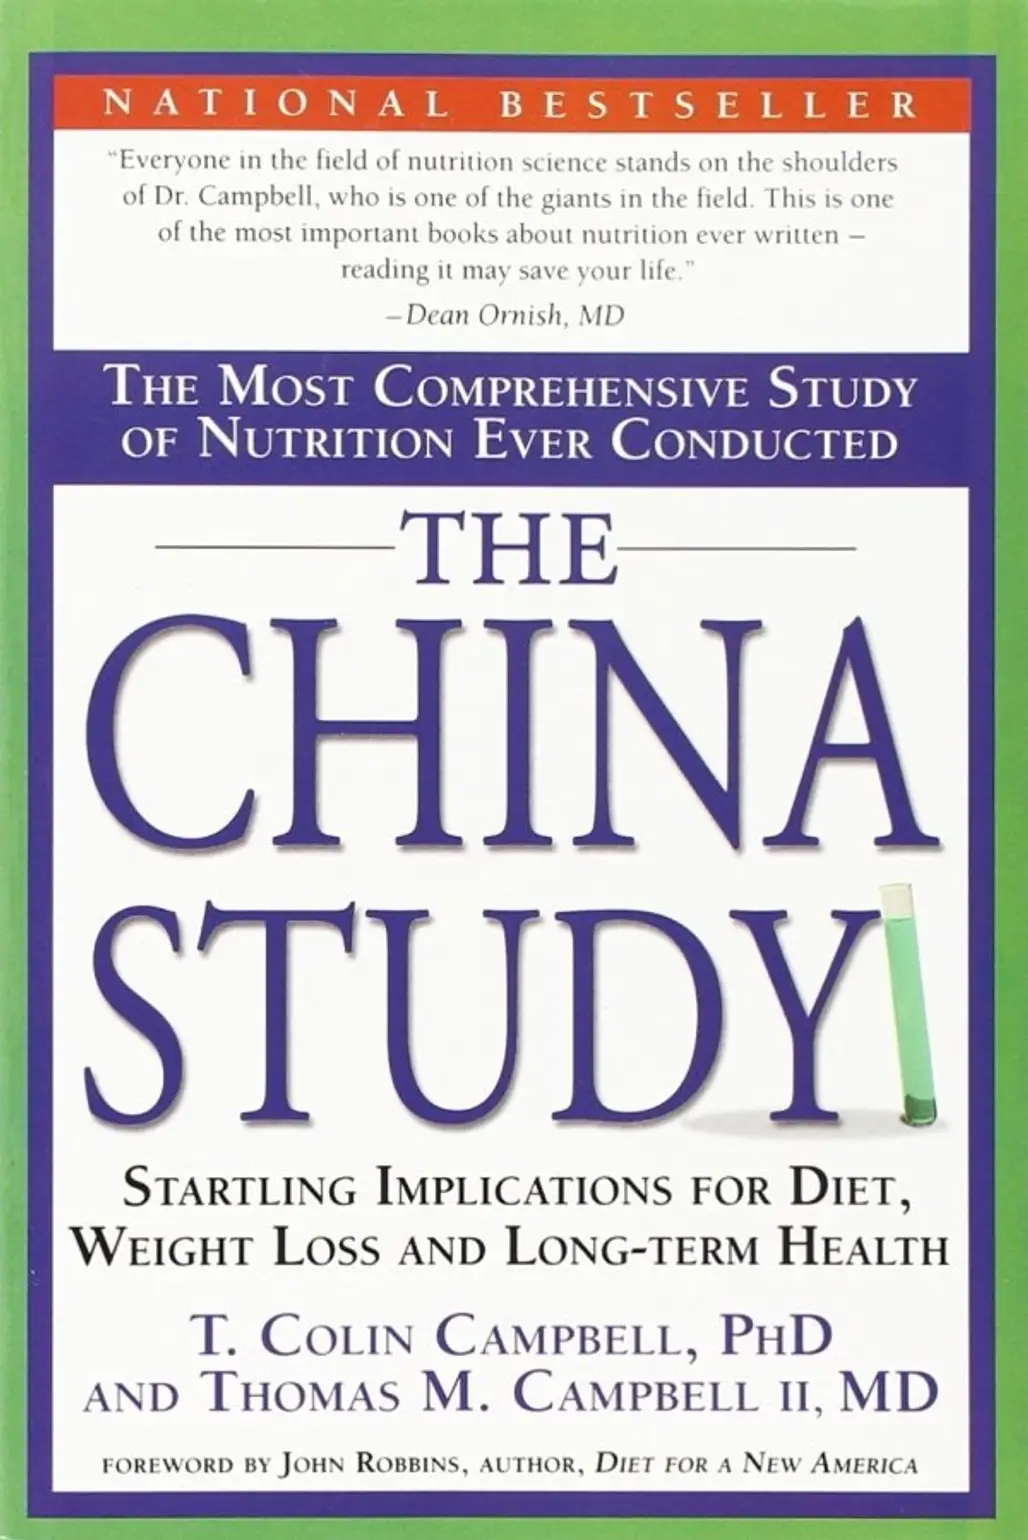 The China Study